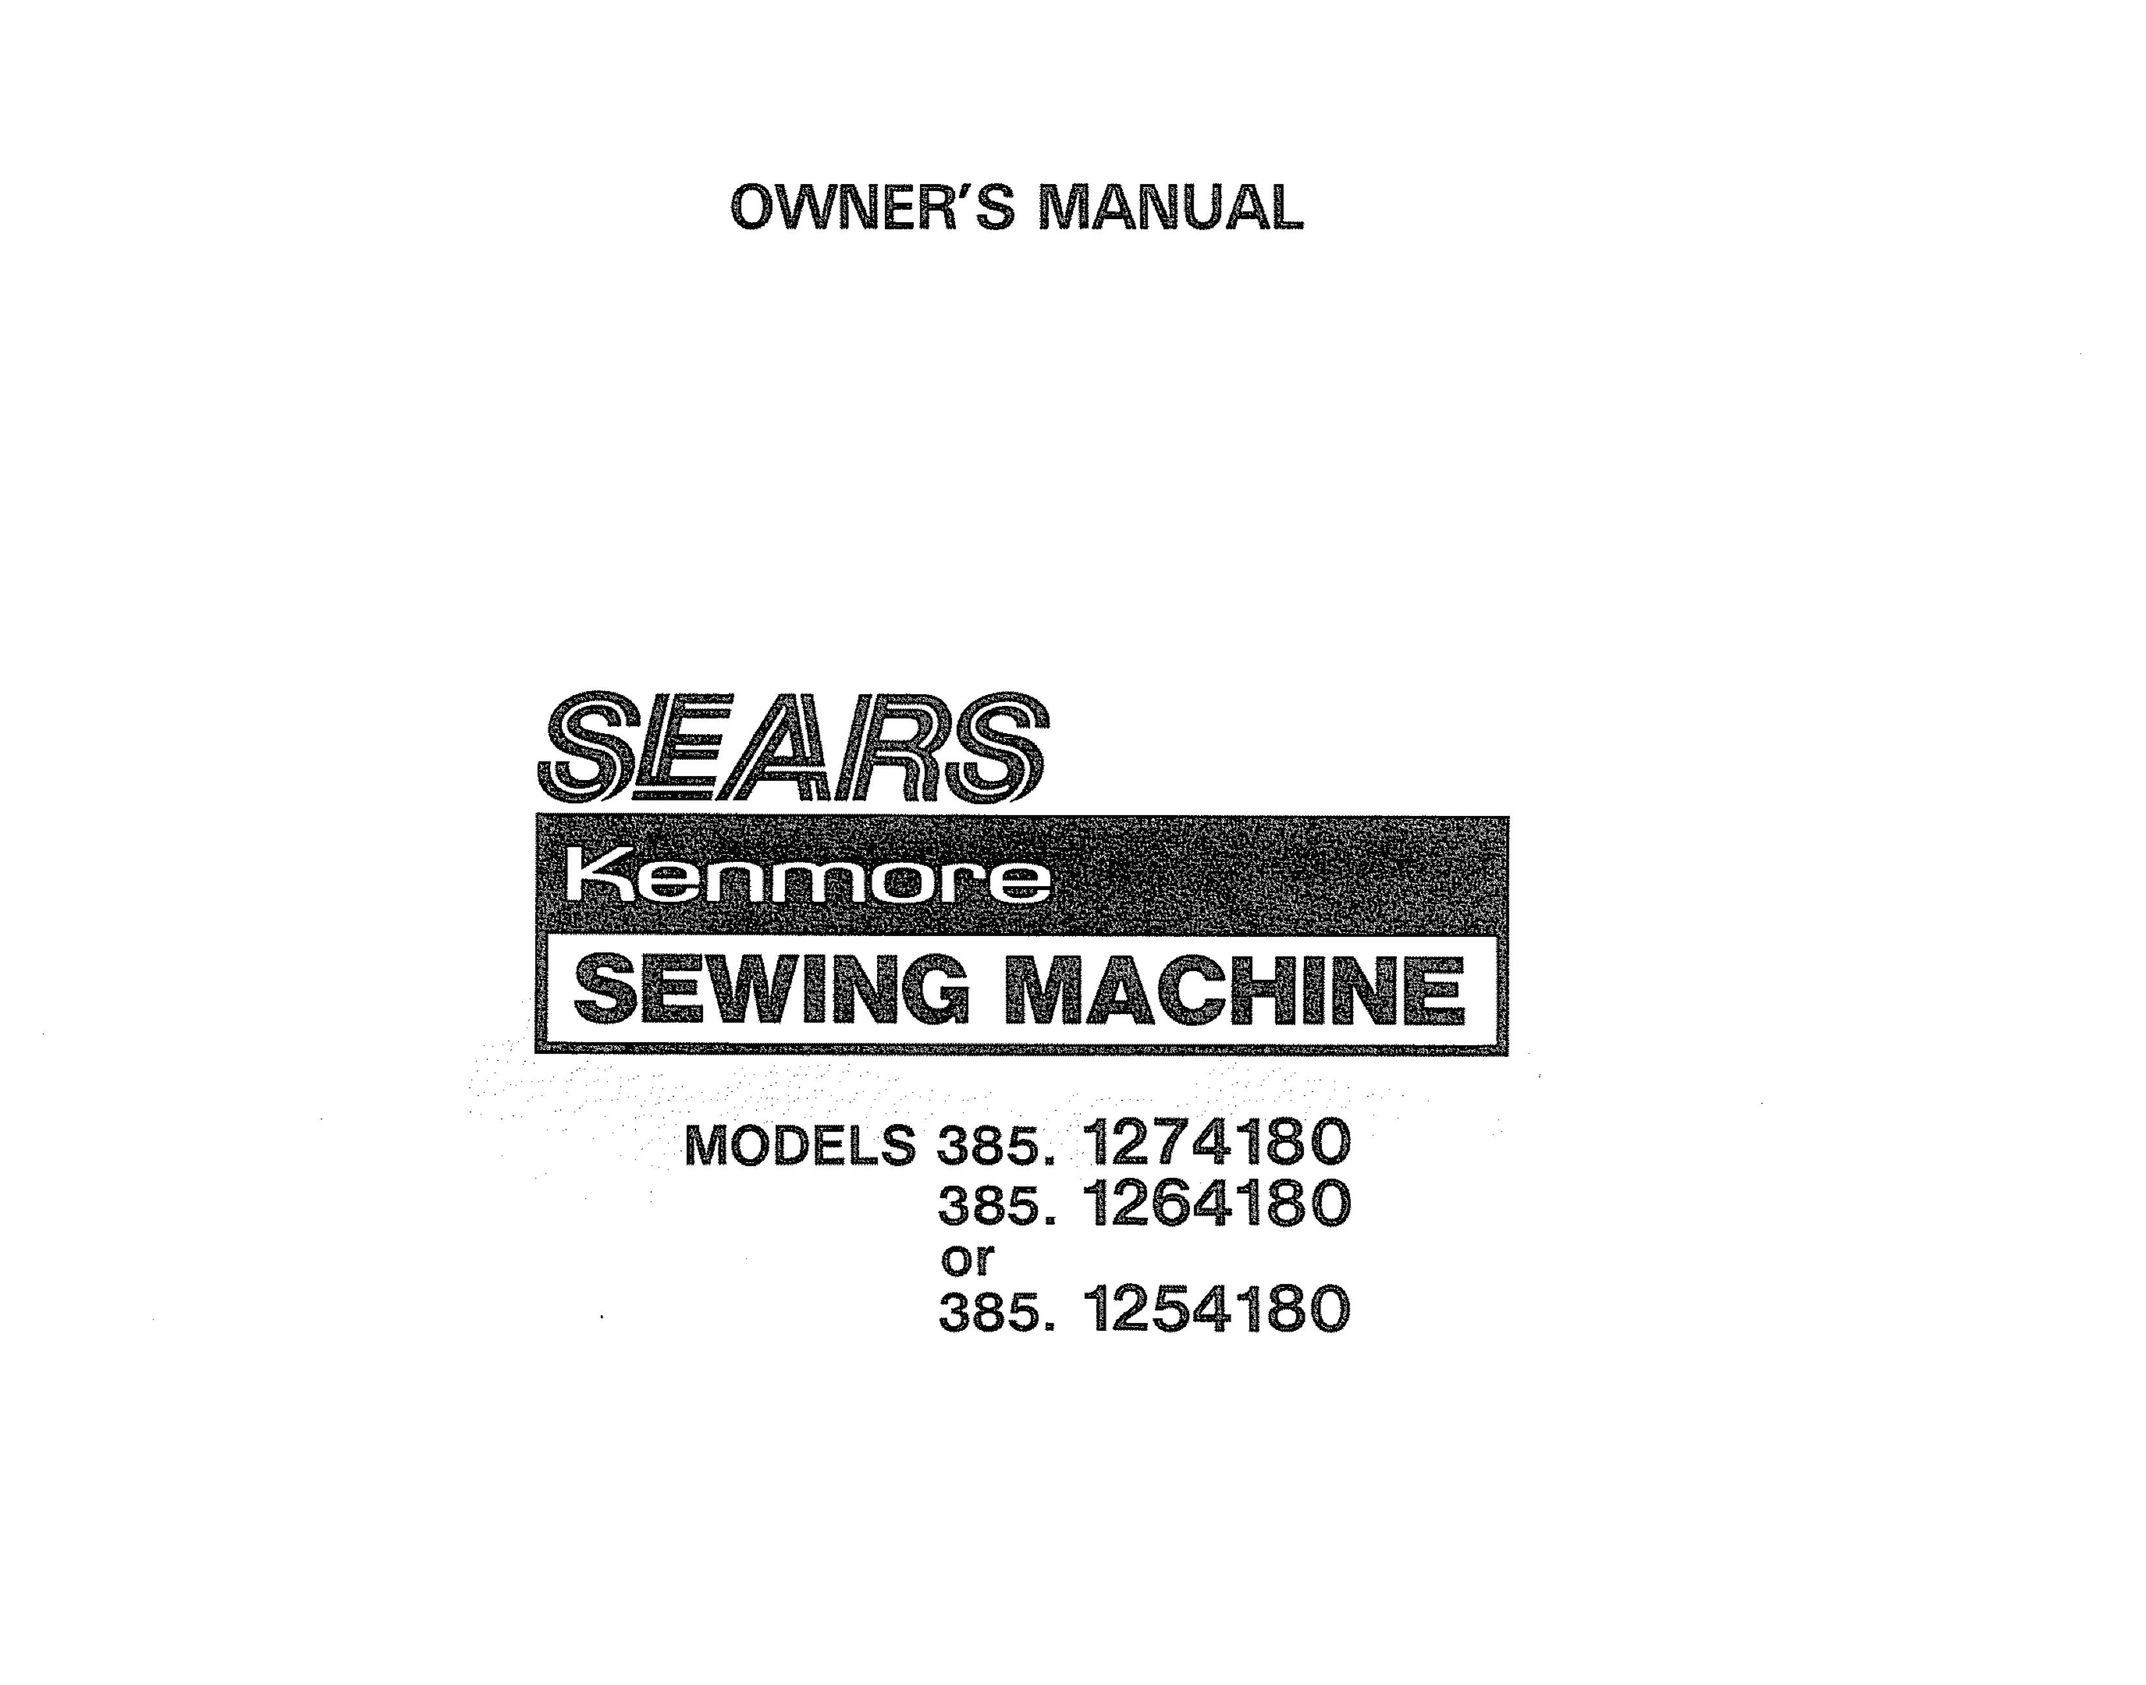 Sears 385. 1254180 Sewing Machine User Manual